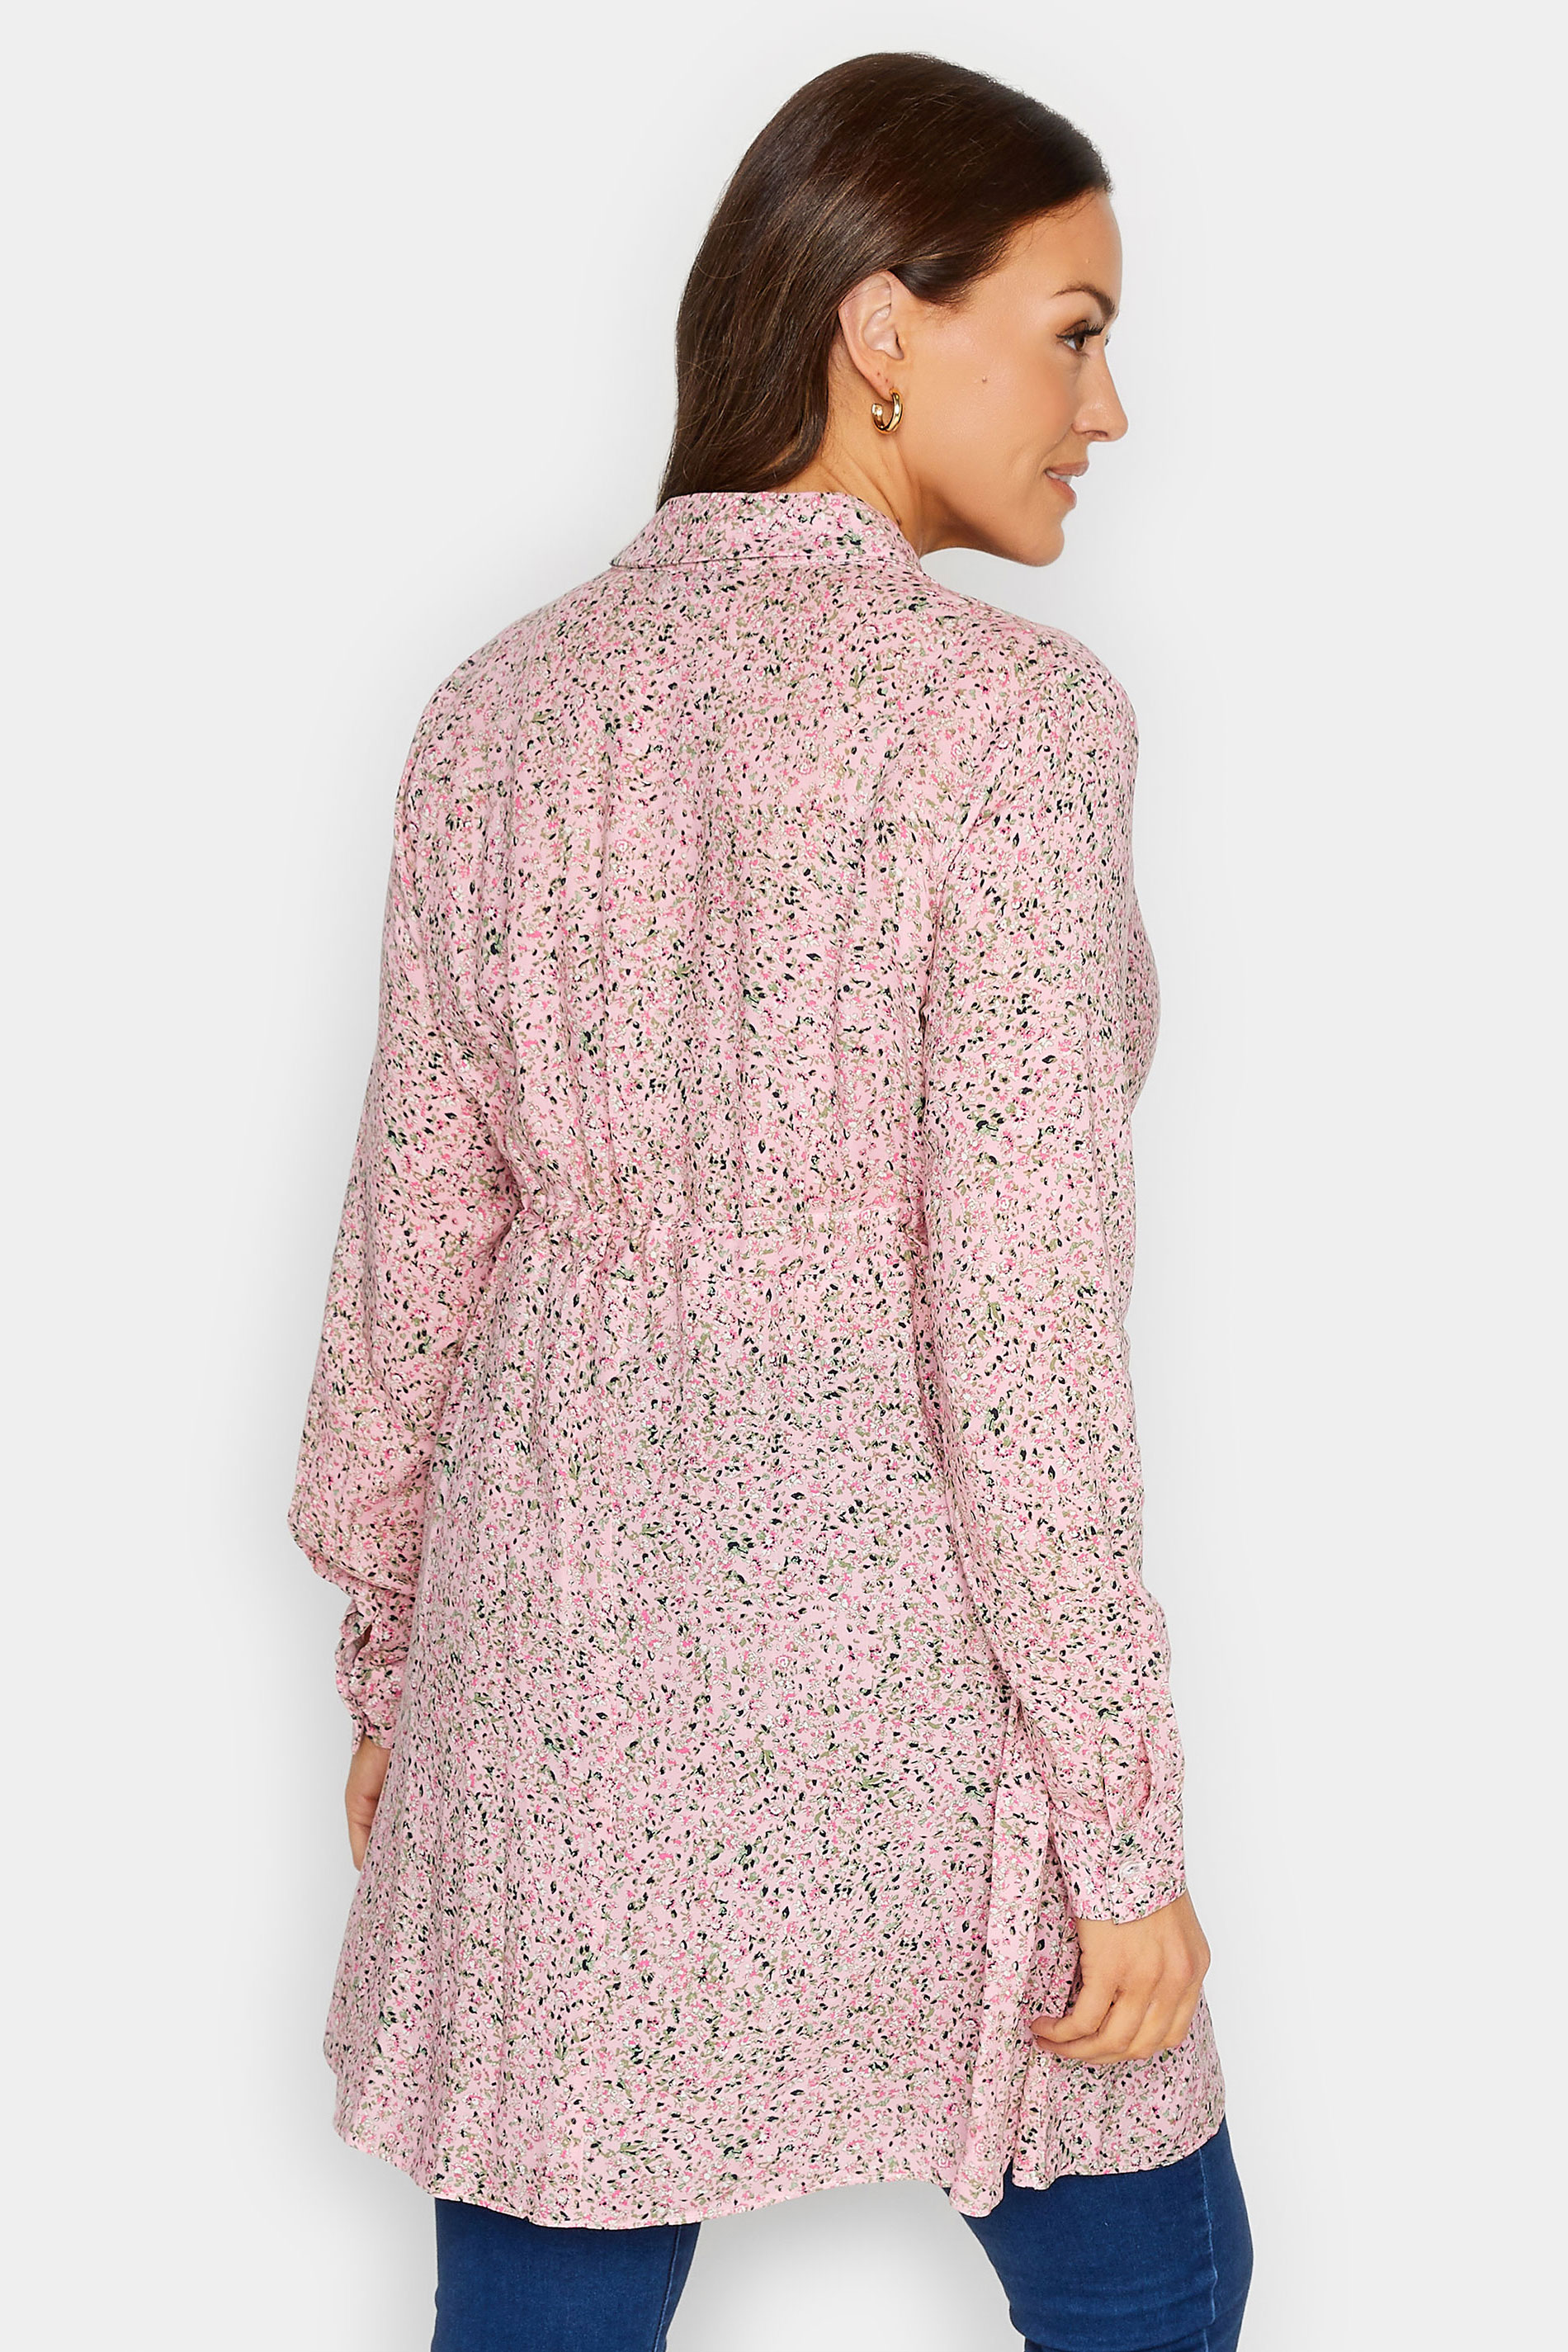 M&Co Pink Ditsy Print Tie Waist Tunic Shirt | M&Co 3